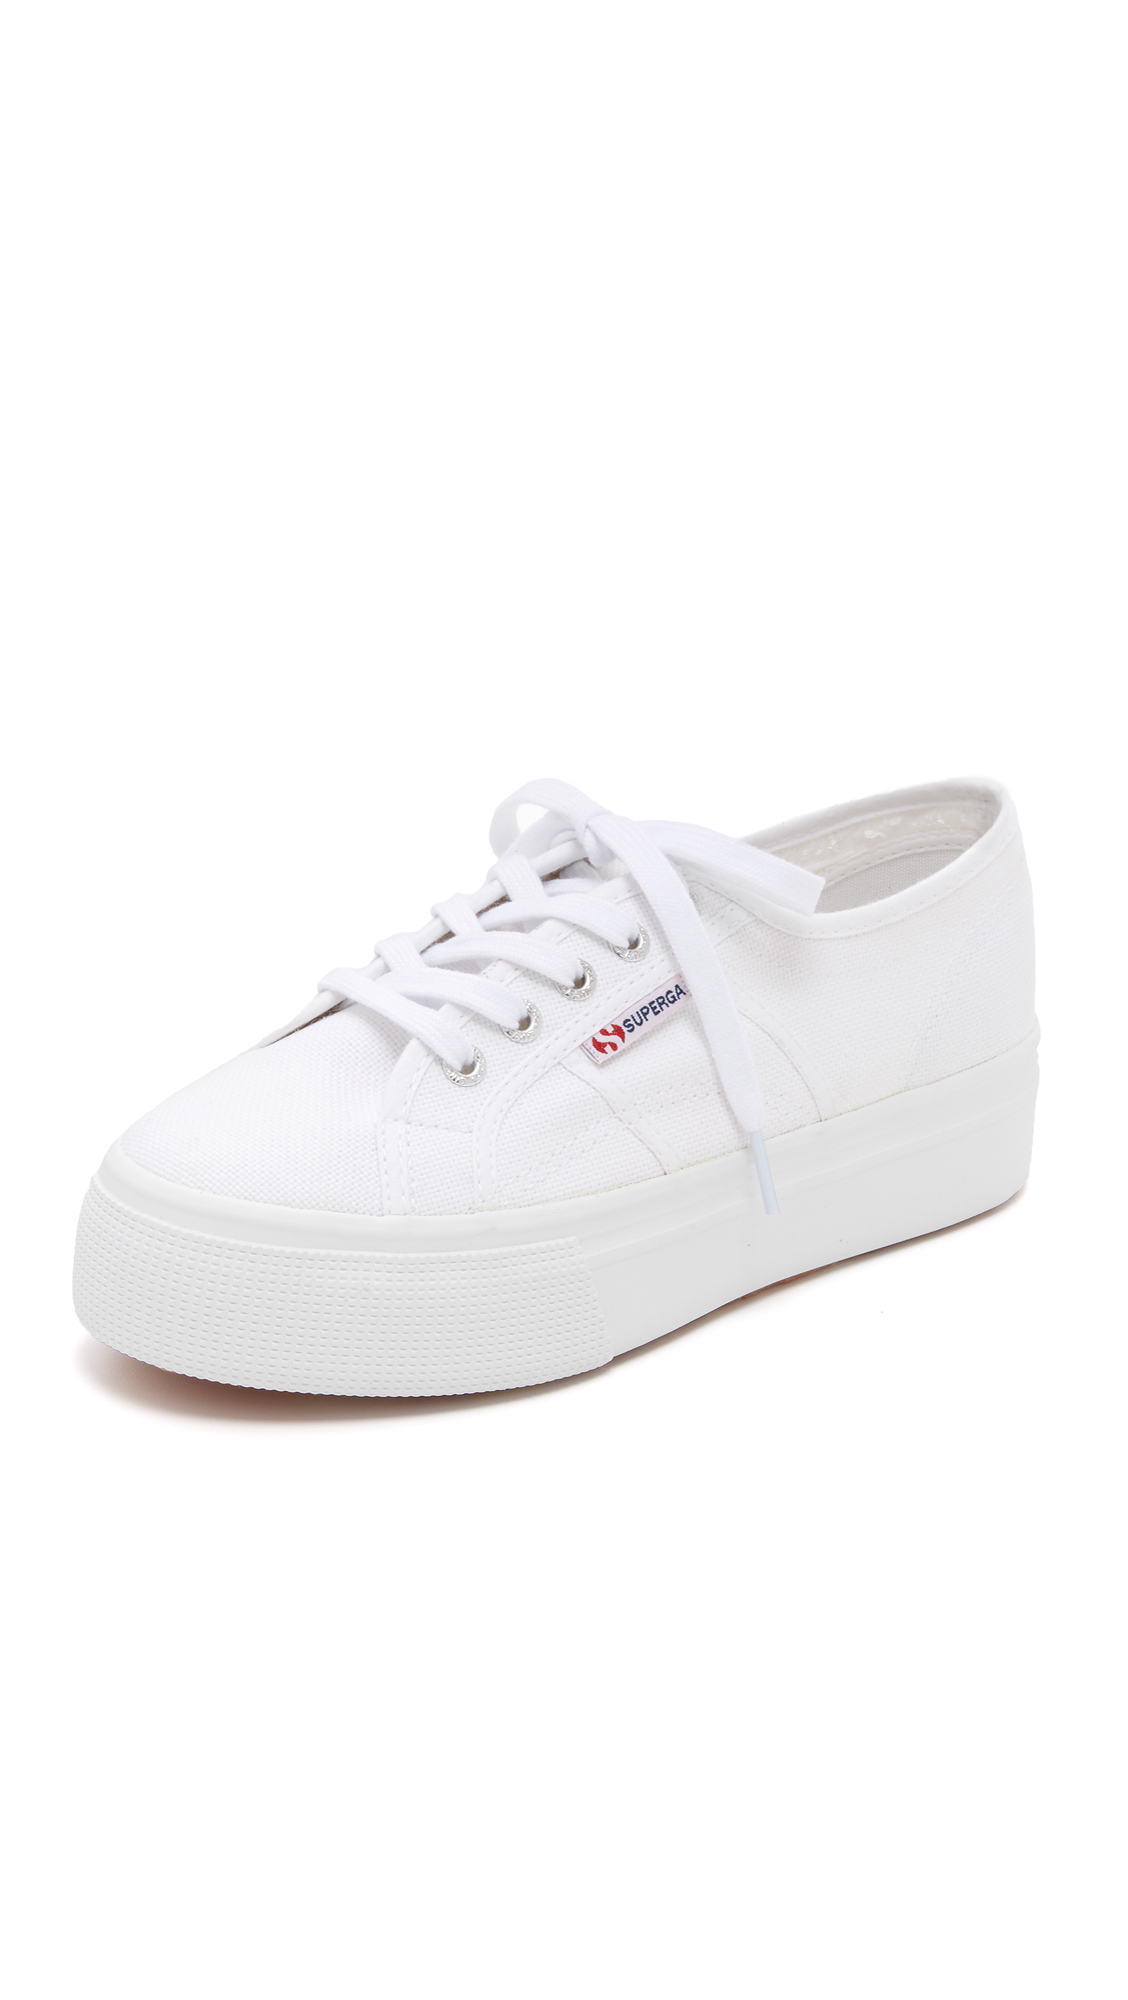 Superga 2790 Acotw Platform Sneakers in White | Lyst